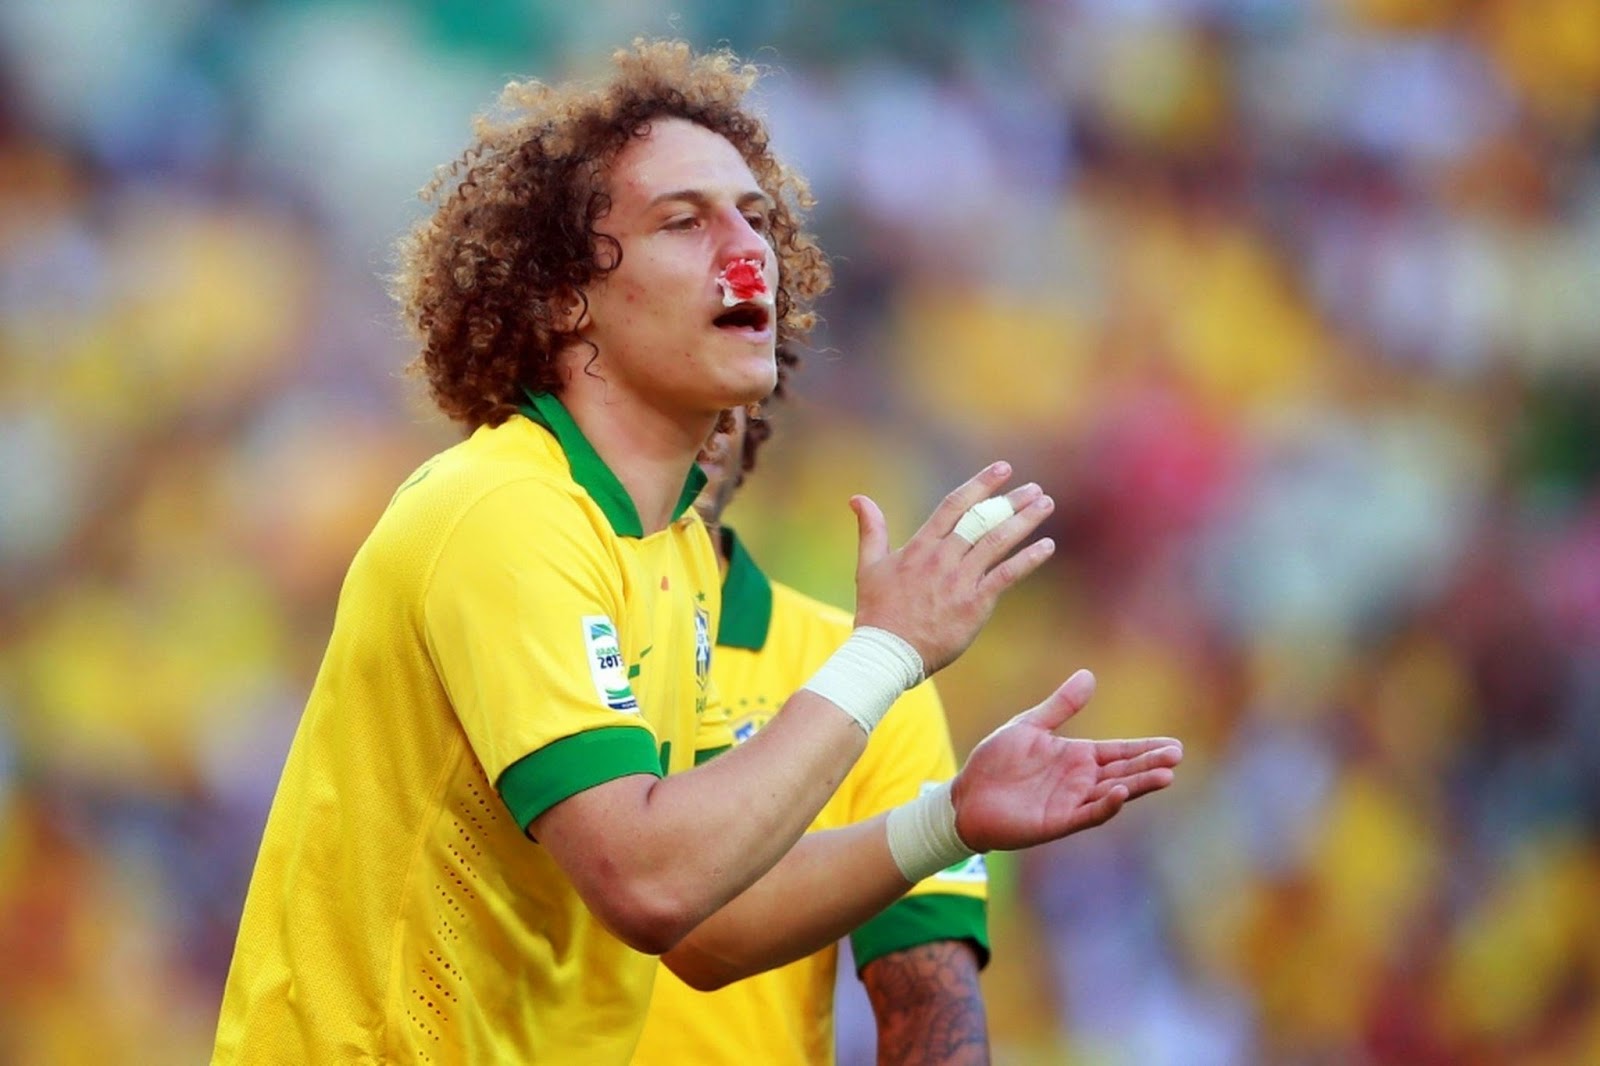 ALL SPORTS PLAYERS: David Luiz Young Brazilian Footballer 2014